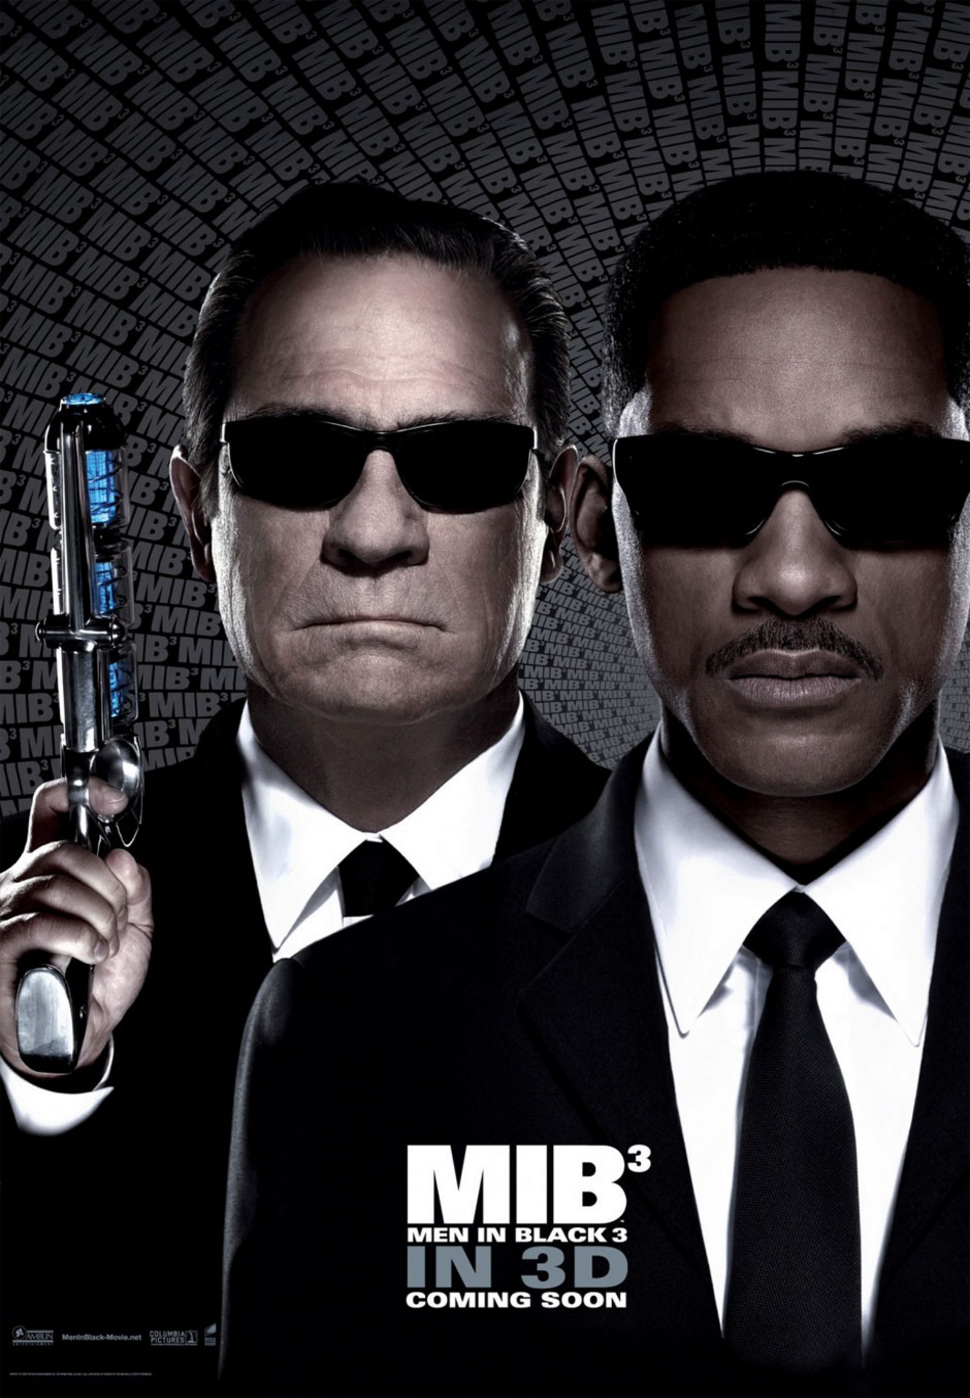 Men in Black 3 - Movie Poster #3 (Original)